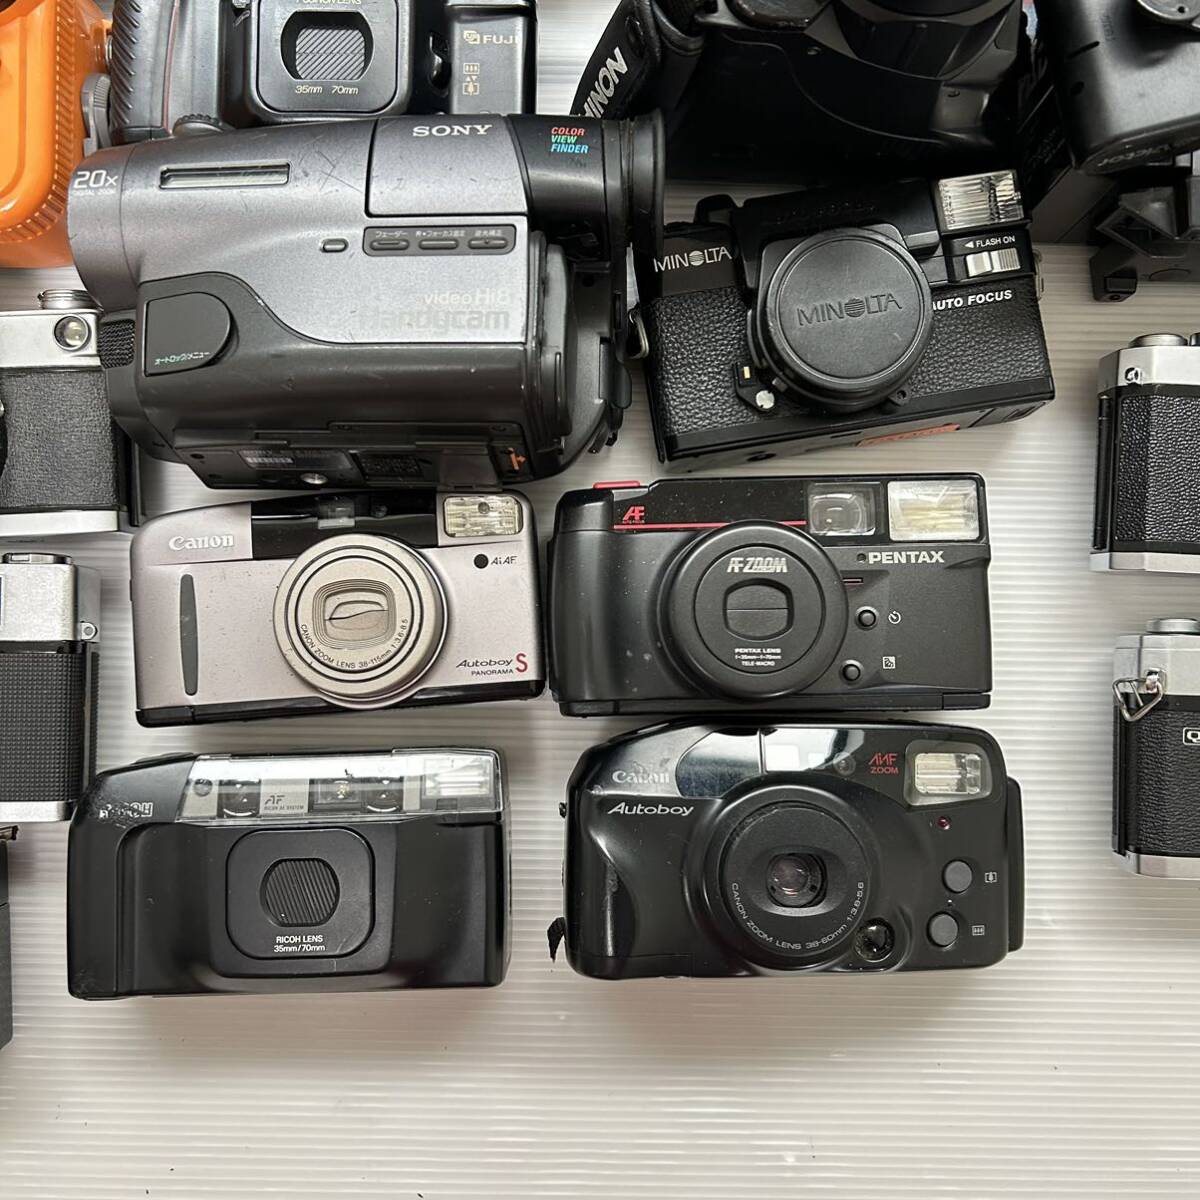 1 jpy ~ film camera video camera CASIO Canon SHARP FUJI SONY PENTAX Nikon CHINON Victor RICOH MINOLTA ( junk operation not yet verification TM)